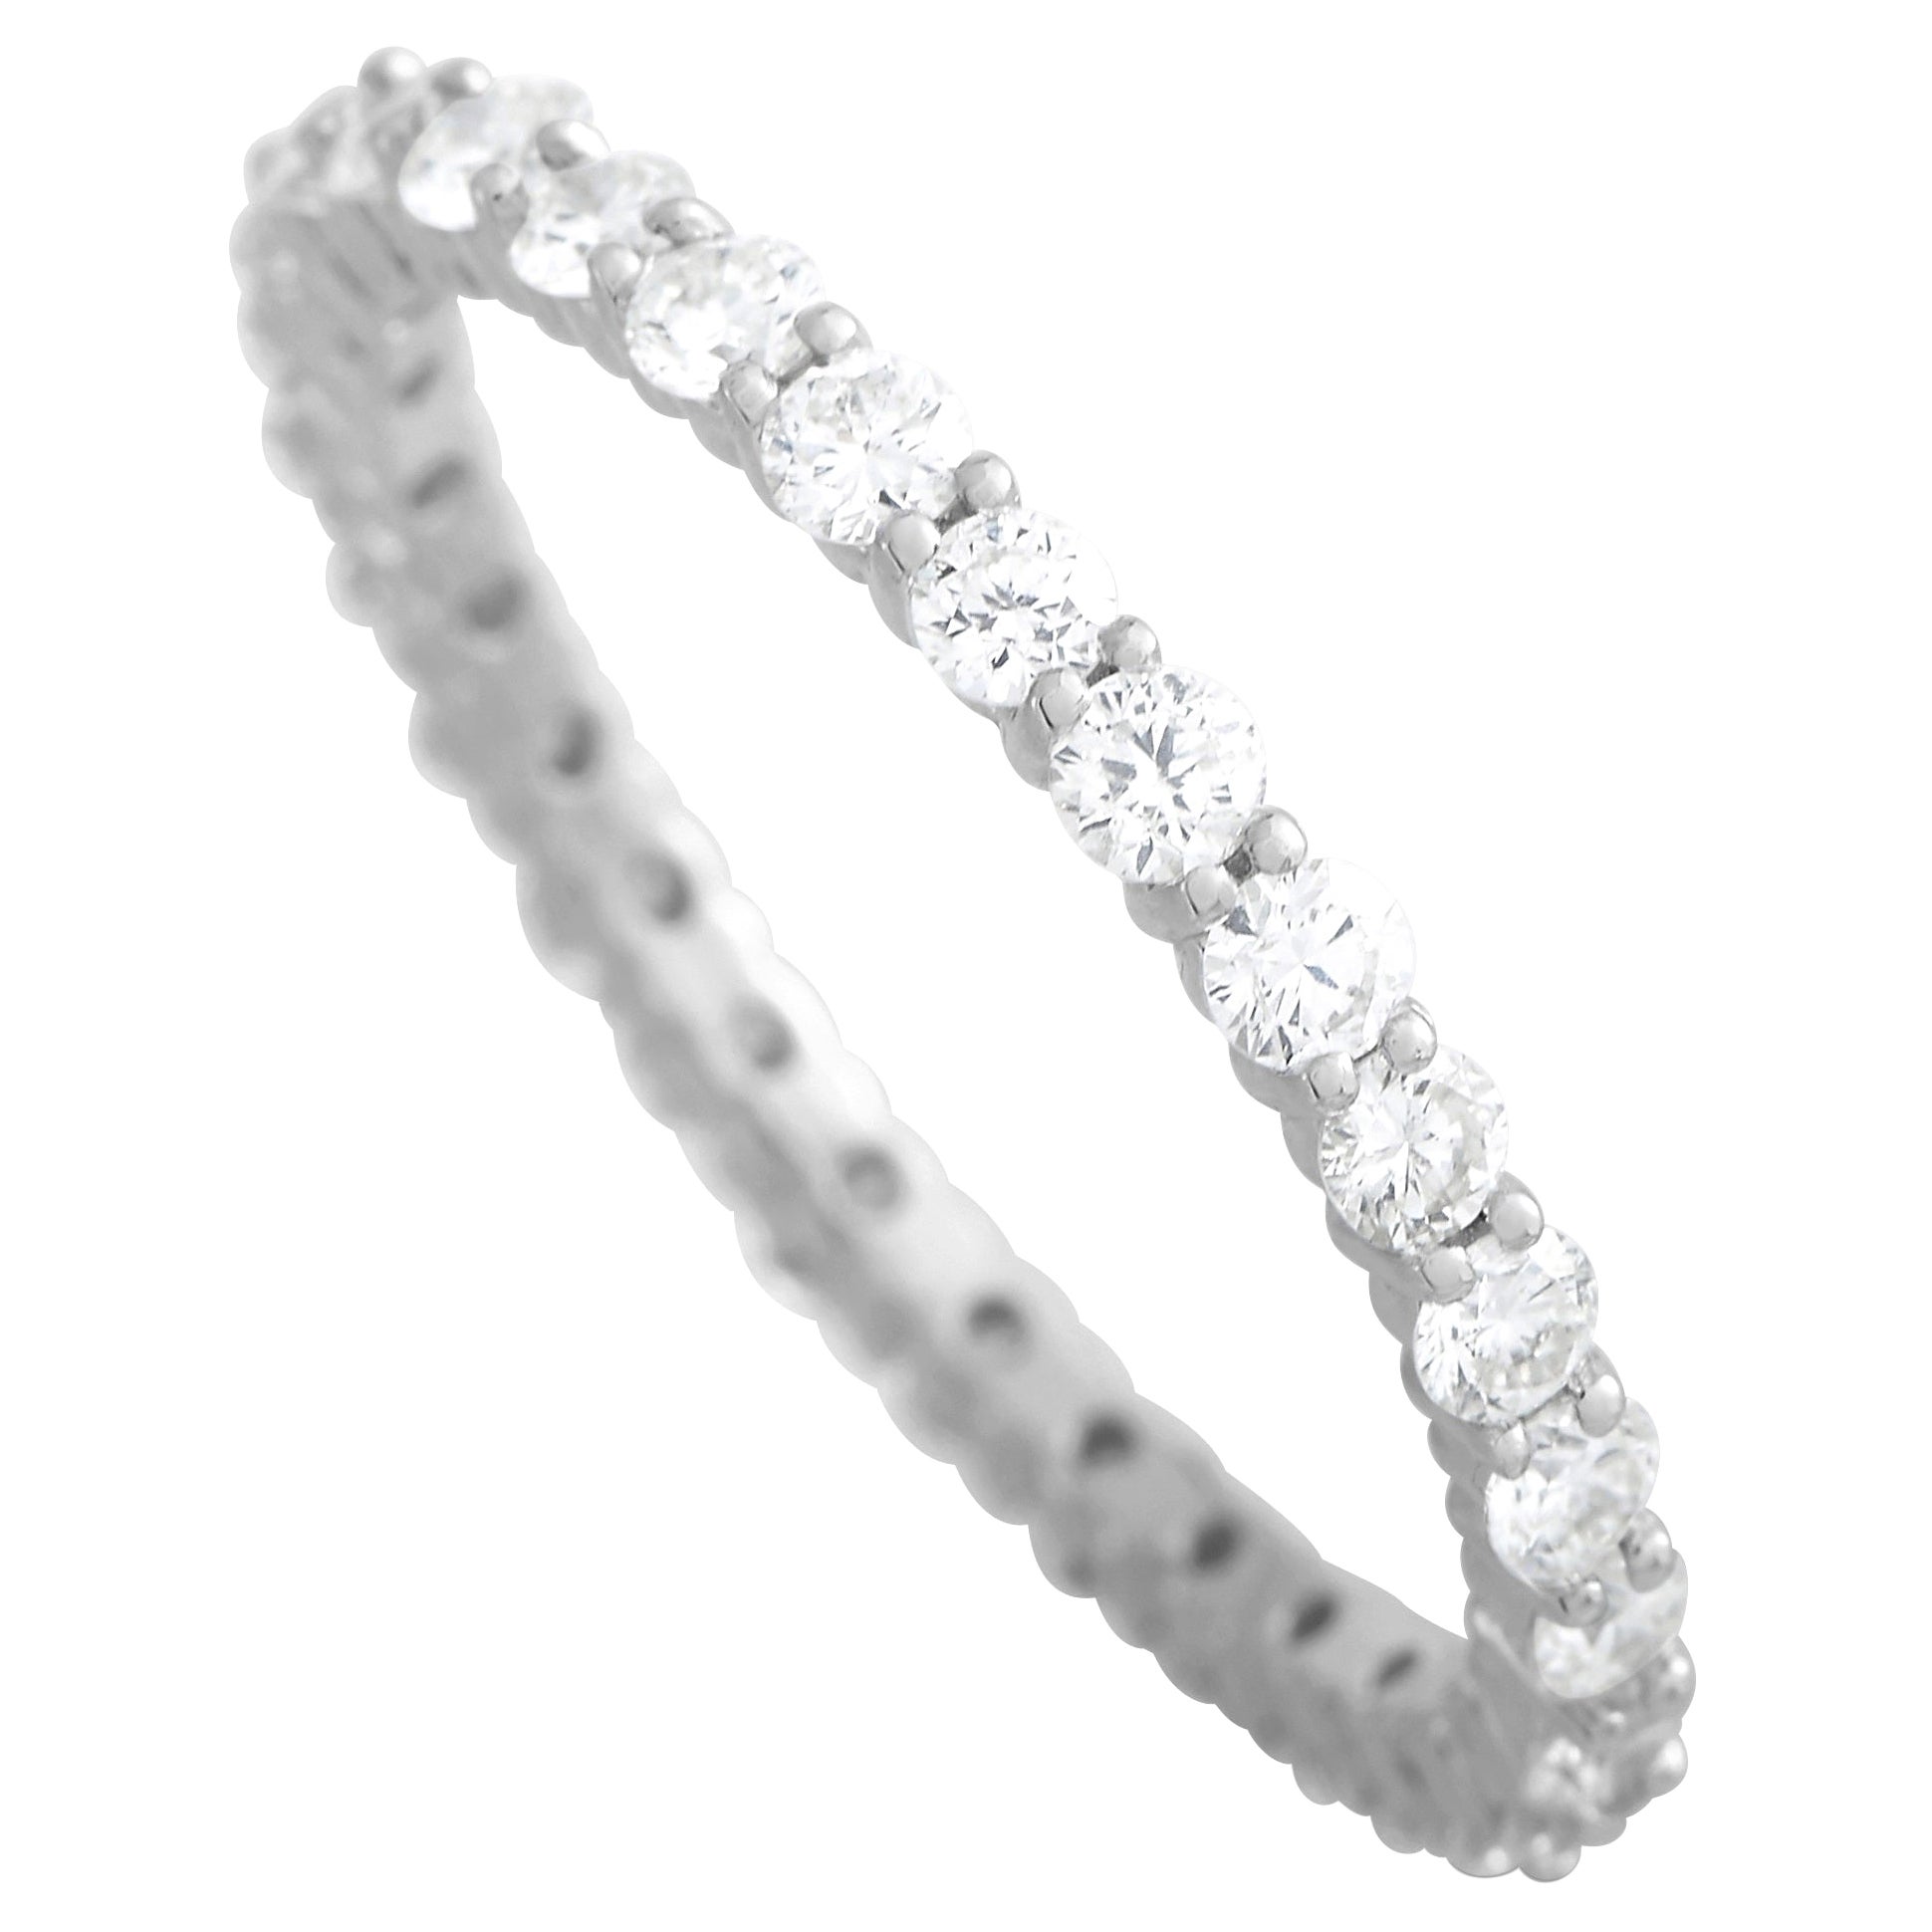 LB Exclusive 14K White Gold 0.33 Ct Diamond Band Ring